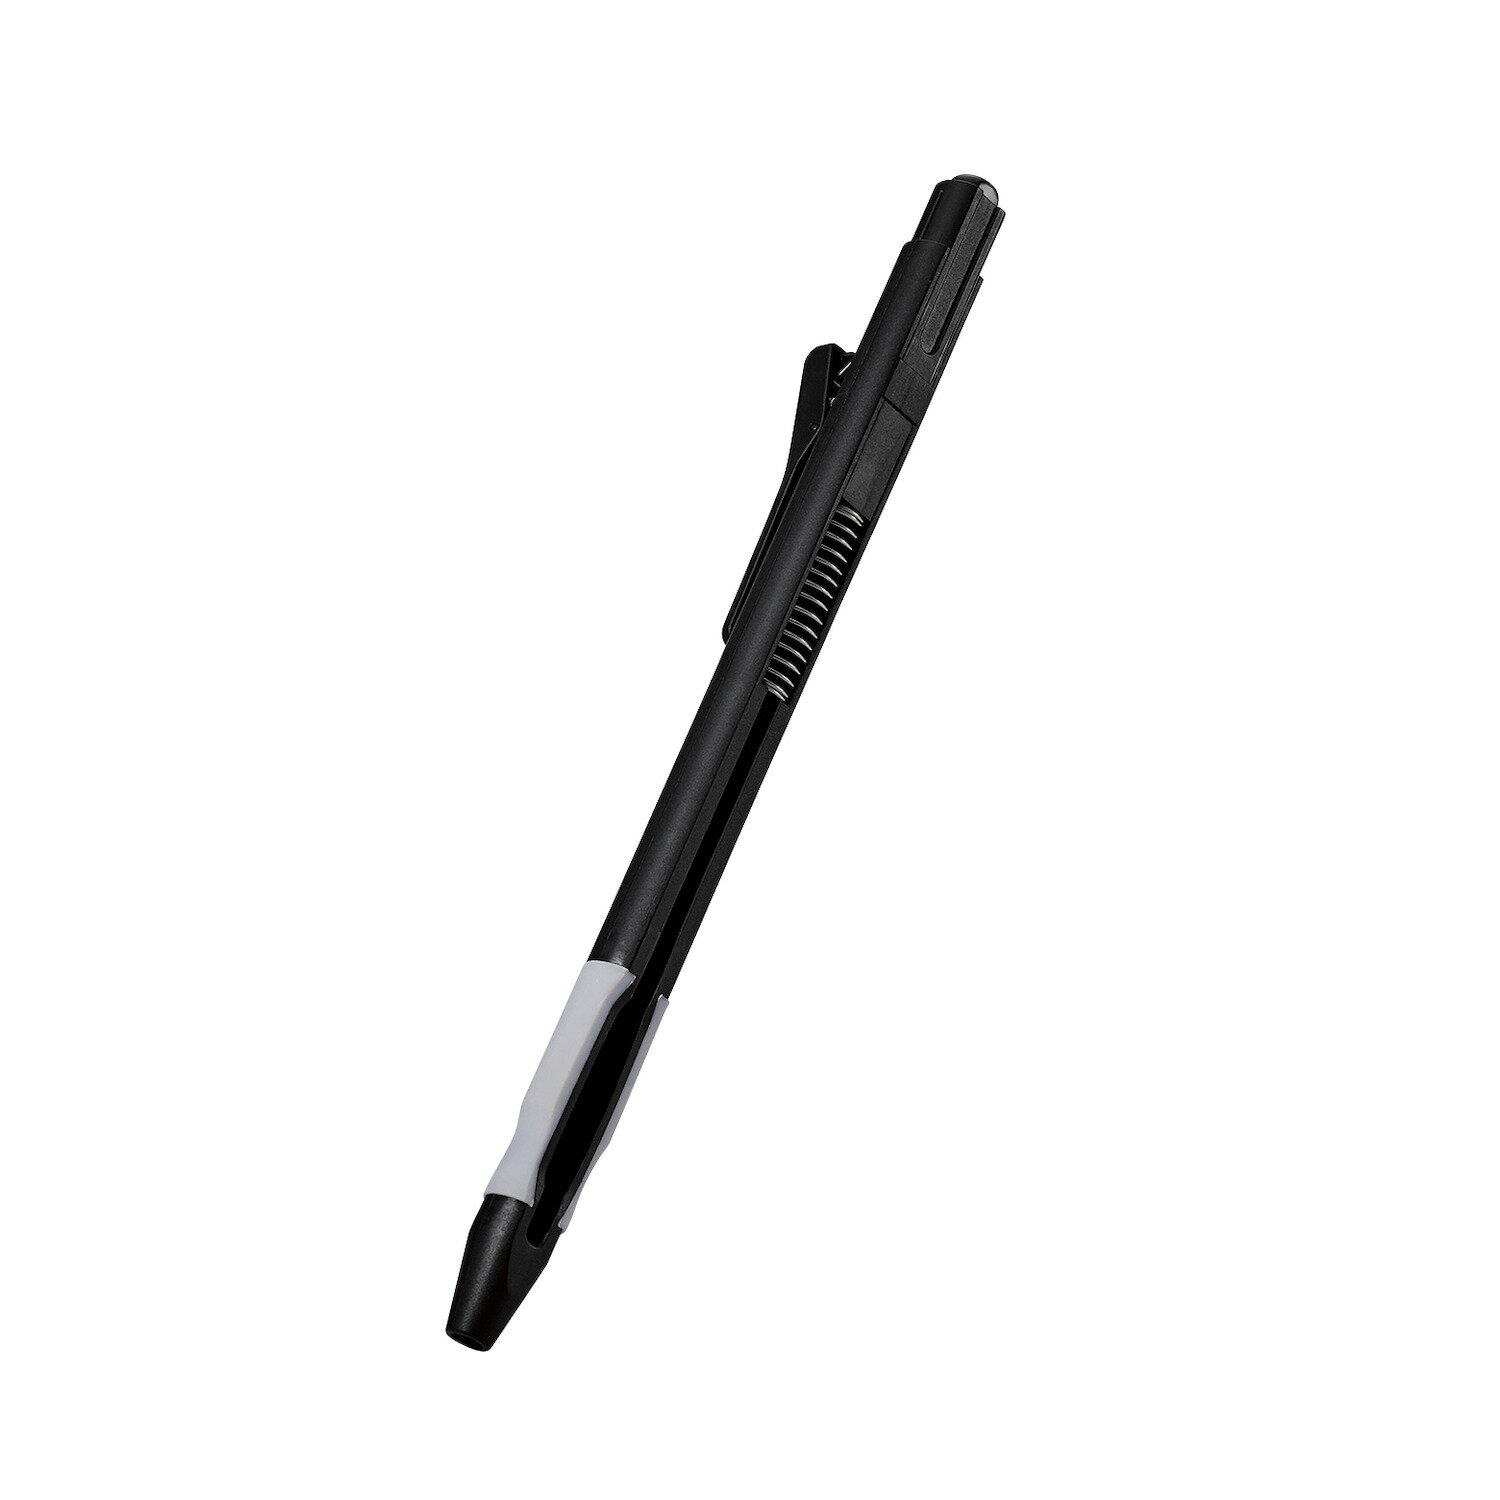 [ELECOM]Apple Pencil アップルペンシル 第2世代 ケース ハード カバー ノック式 クリップ ラバーグリップ付 握りやすい 装着したまま充電可 ブラック TB-APE2KCBK/TBAPE2KCBK 1